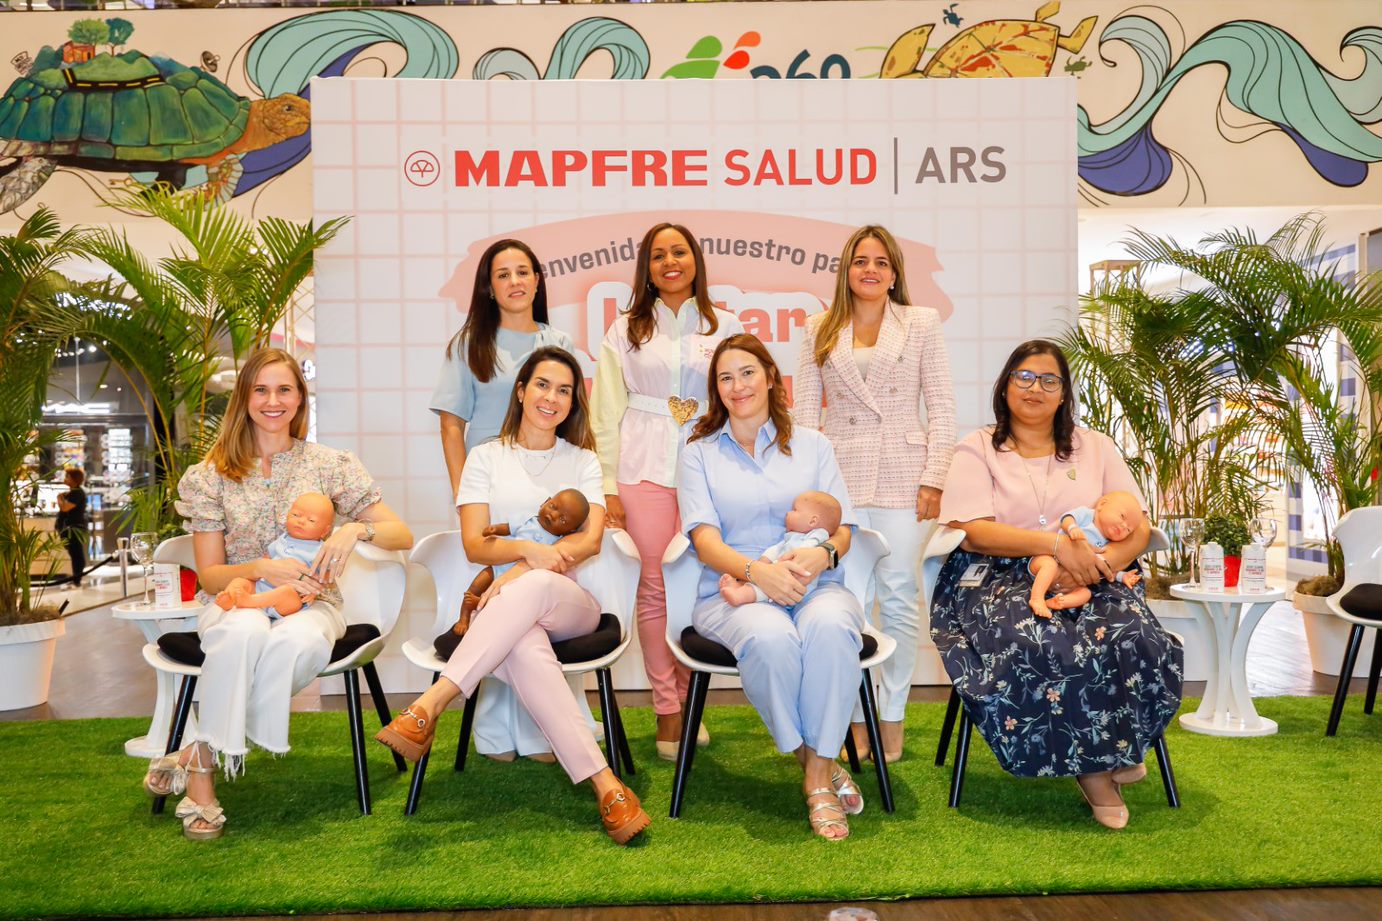 MAFPRE salud ARS reúne cinco expertas en panel sobre lactancia materna